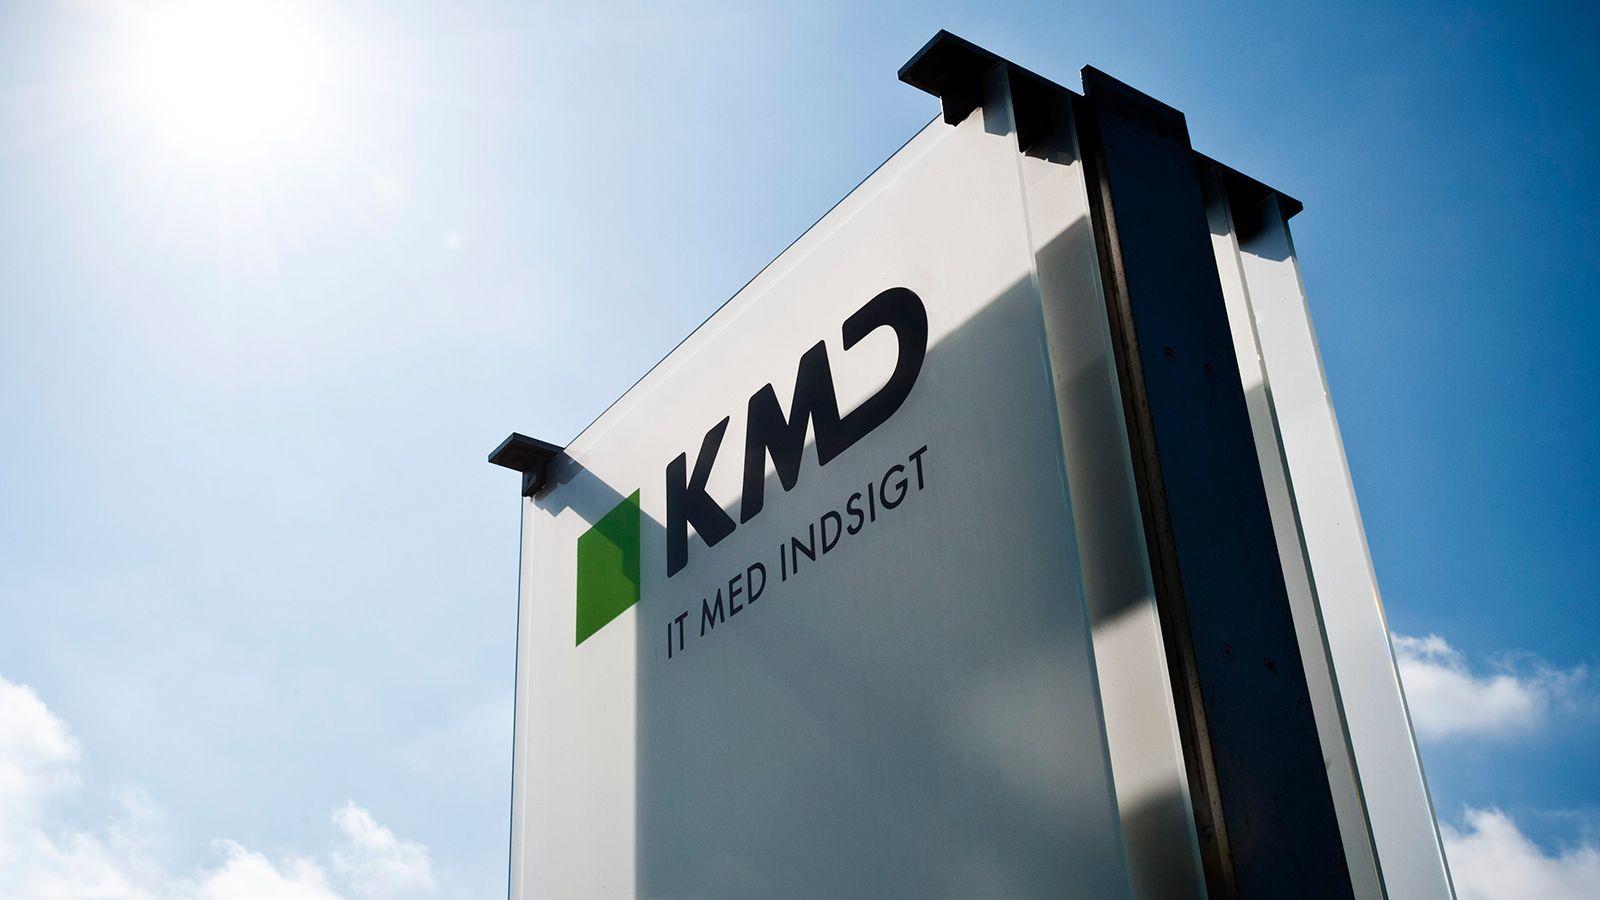 KMD headquarters in Ballerup, Denmark